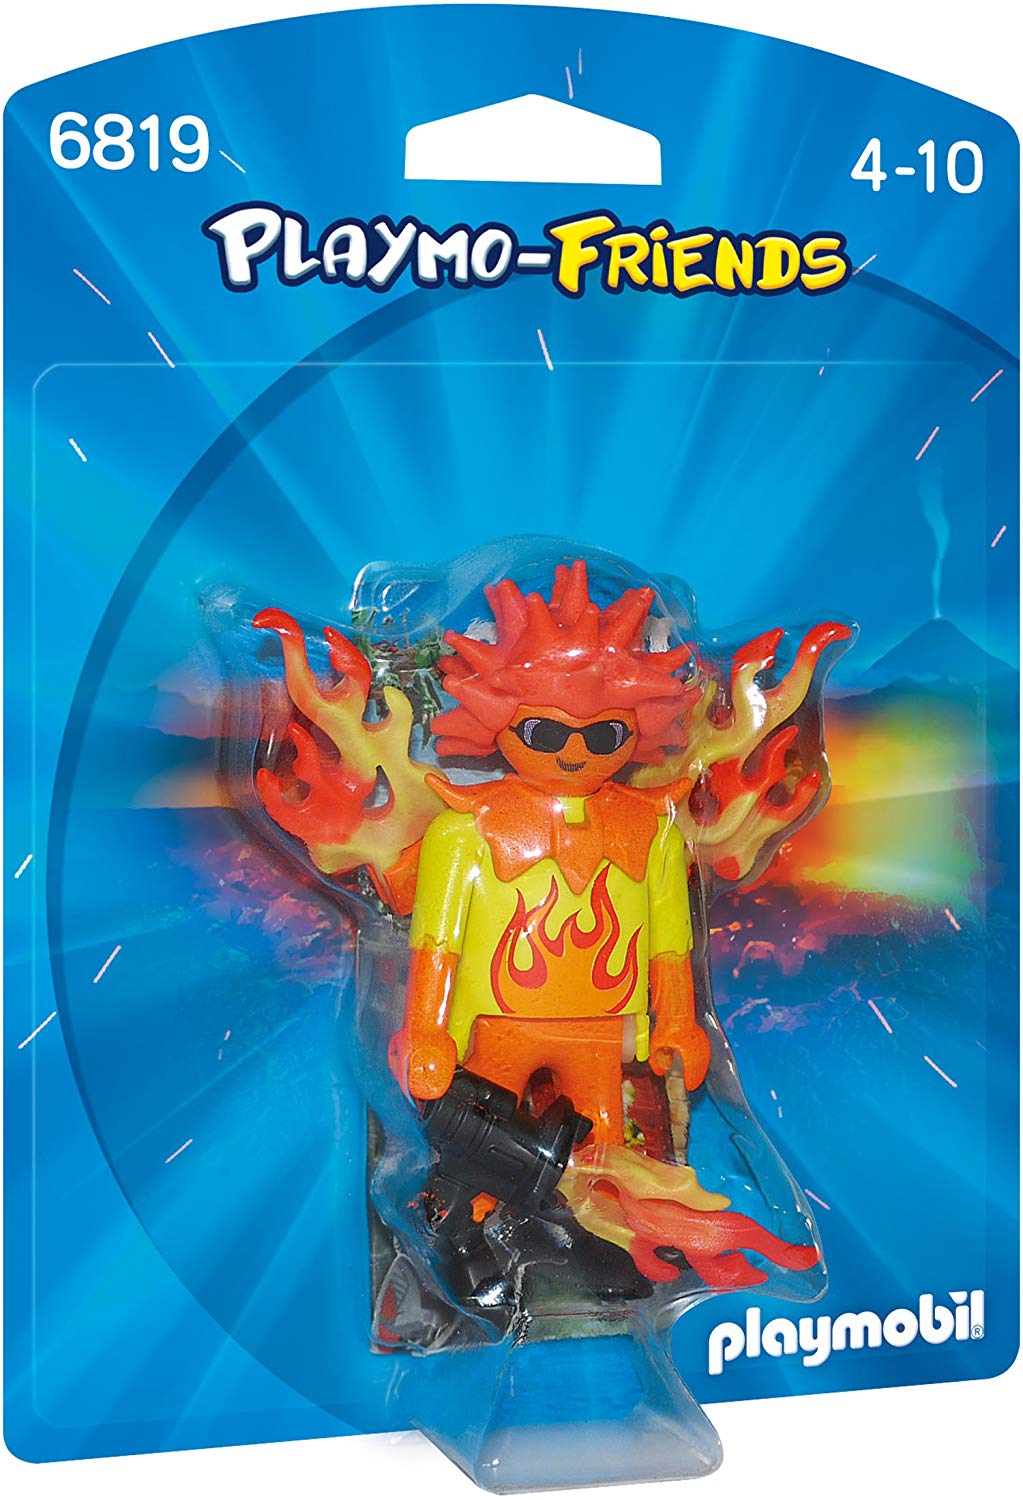 Playmobil Playmo Friends Flame Warrior Figure